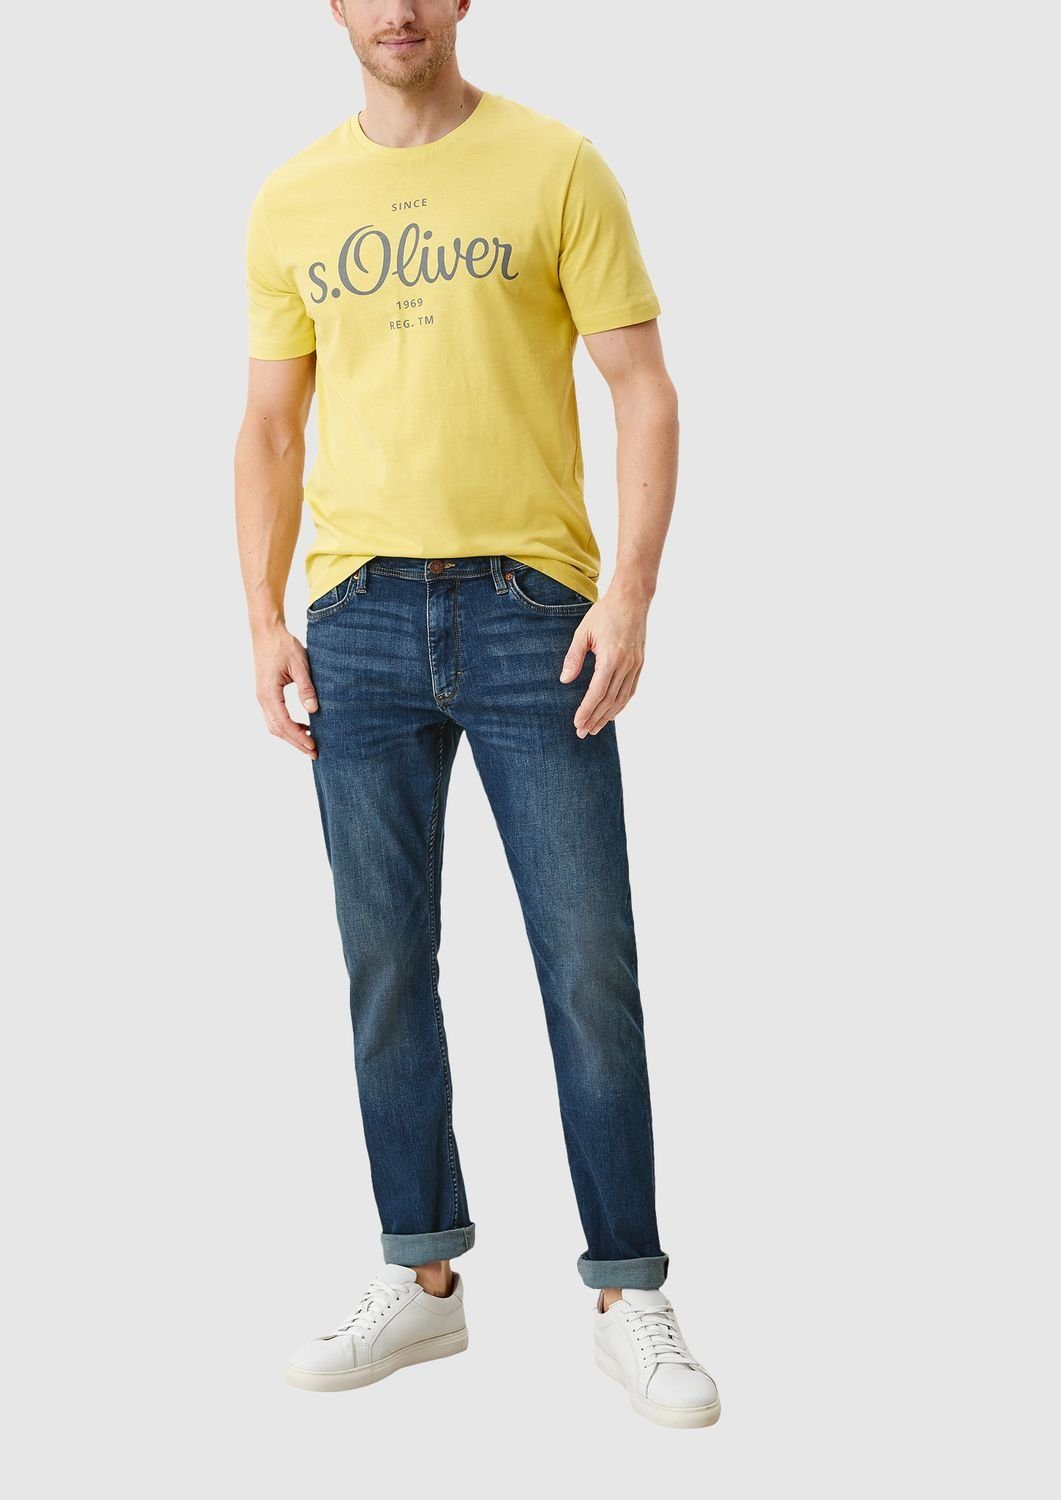 Fit, Bundhöhe: s.Oliver Beinverlauf: Leg KEITH Blau Slim-fit-Jeans Slim Medium rise, Straight